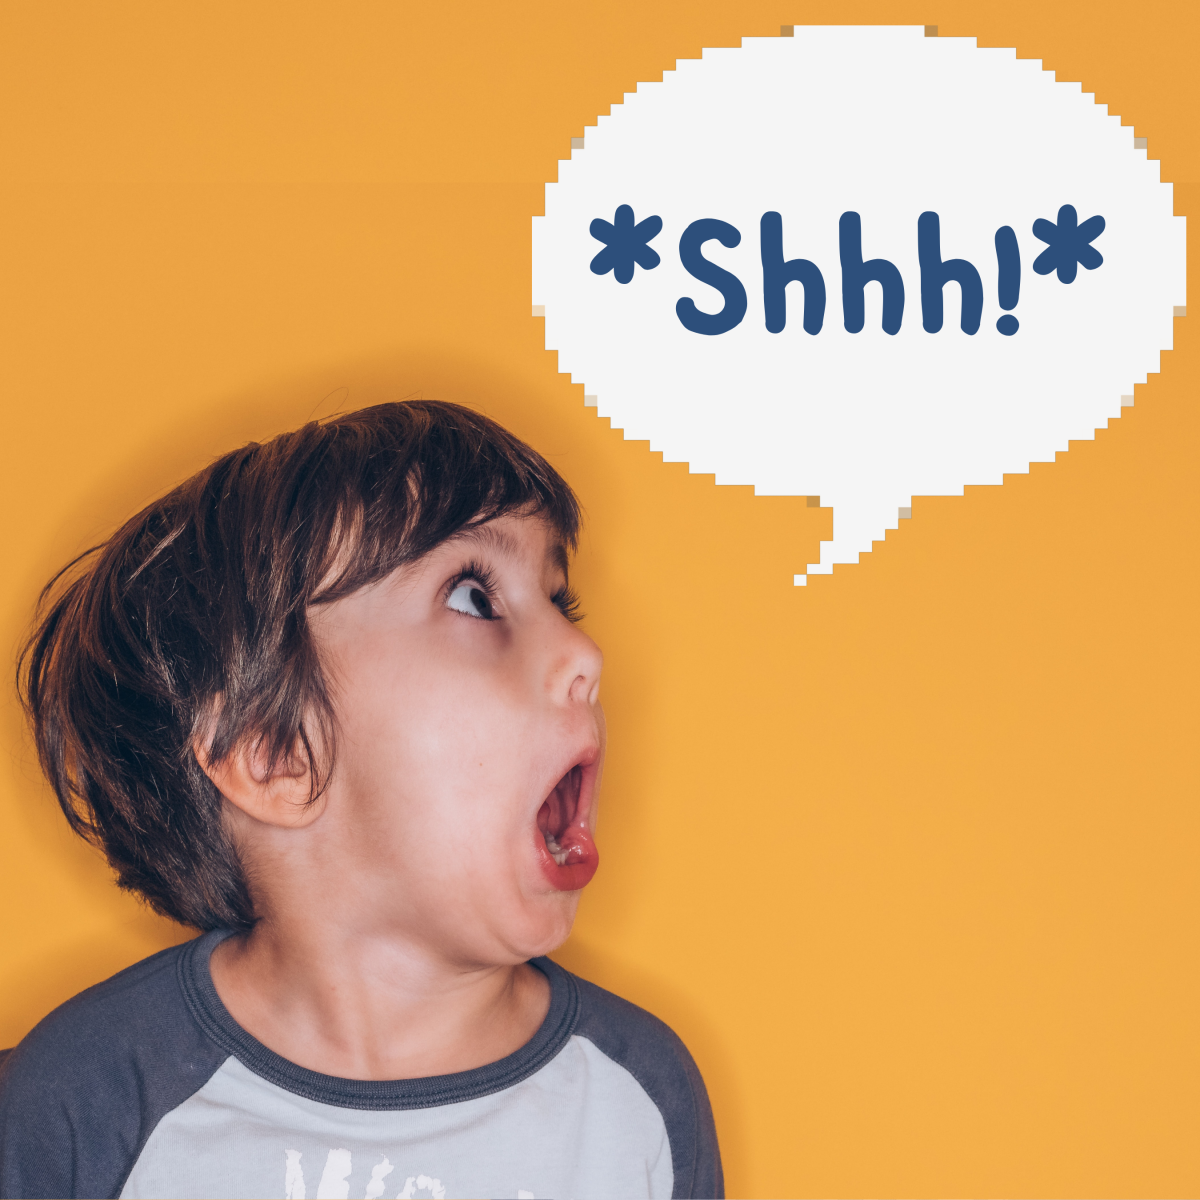 Loud Children: How to Get Noisy Kids to Be Quiet